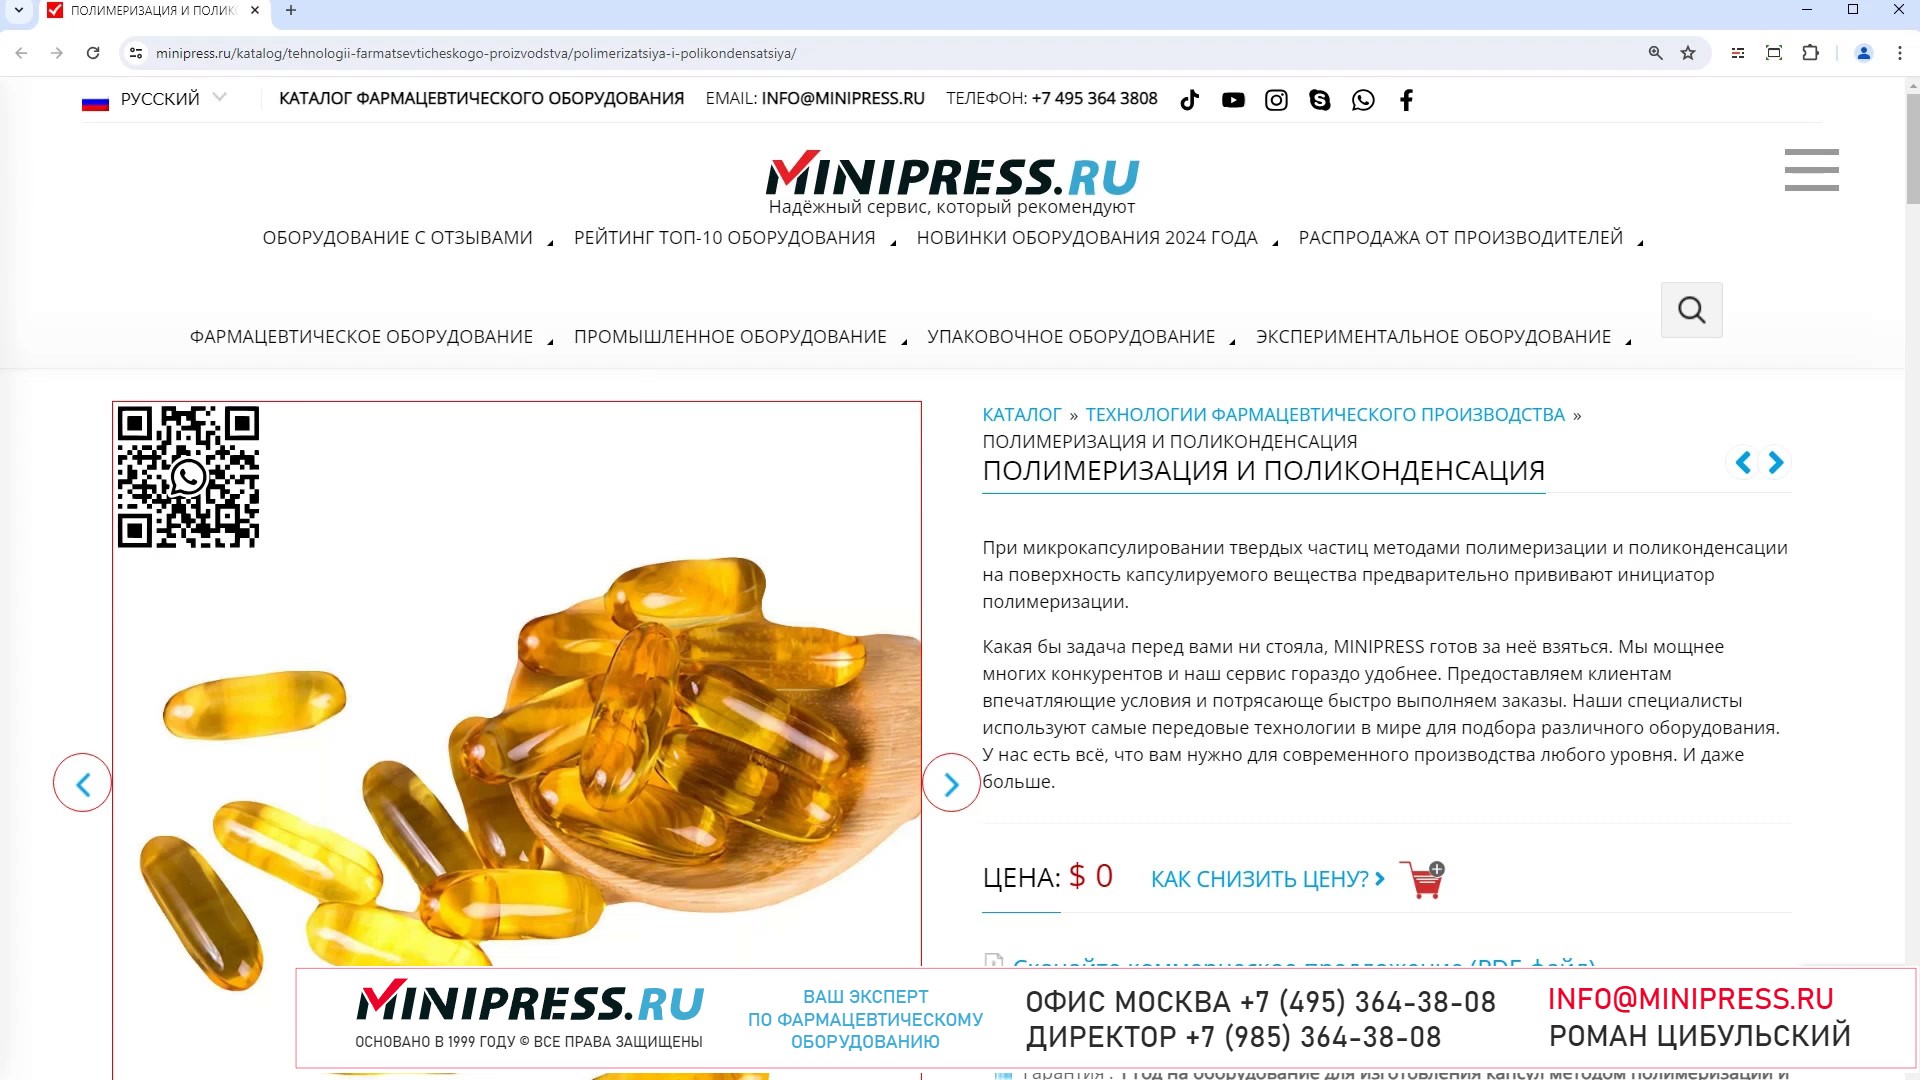 Minipress.ru Полимеризация и поликонденсация